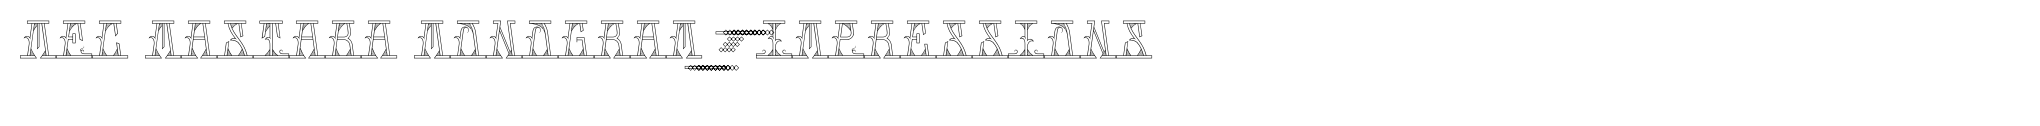 MFC Mastaba Monogram 10000 Impressions image